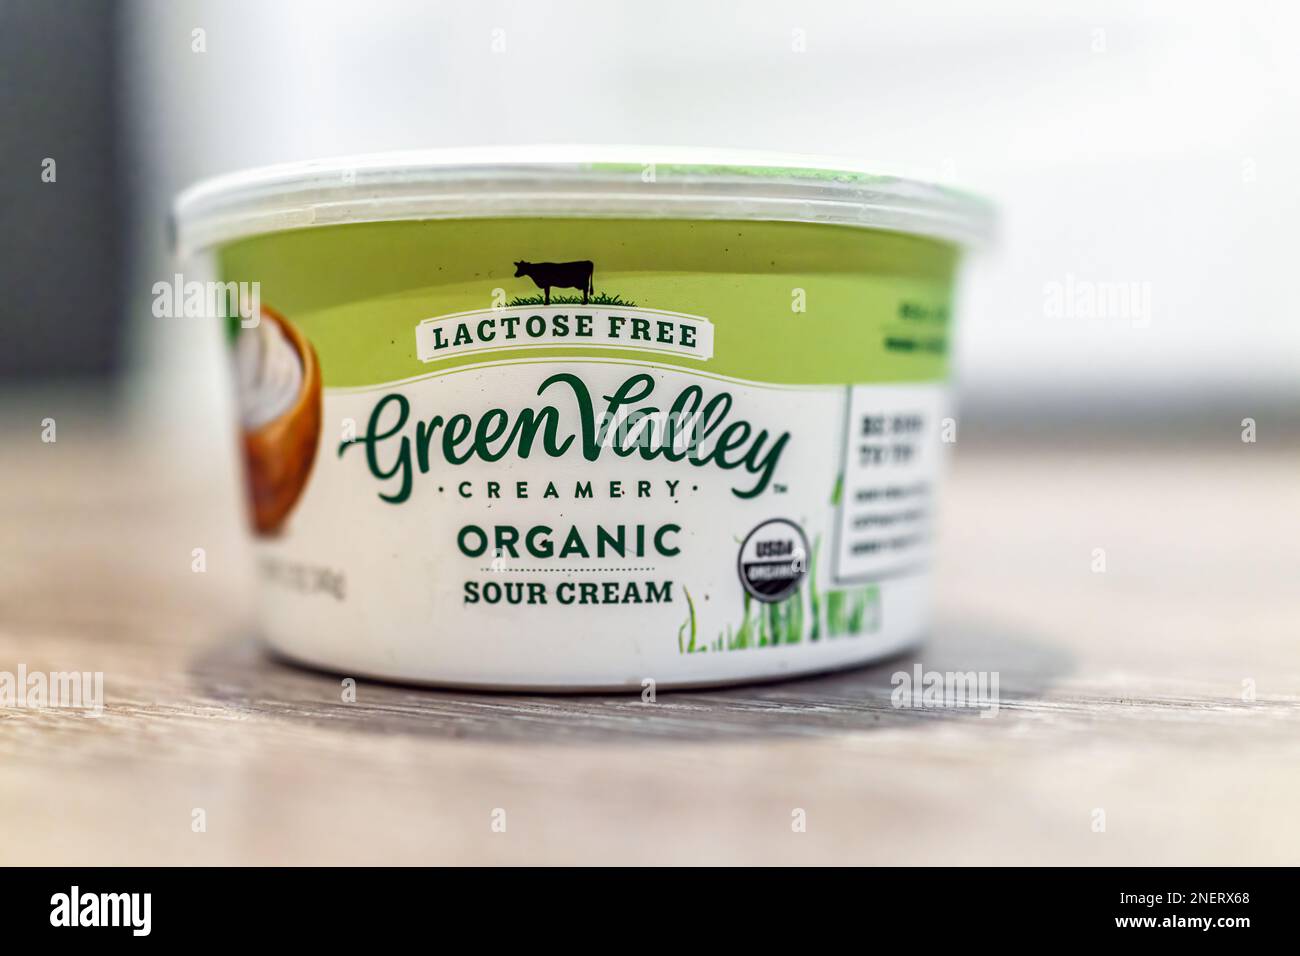 Green Valley Creamery Lactose Free Organic Sour Cream, 12 oz